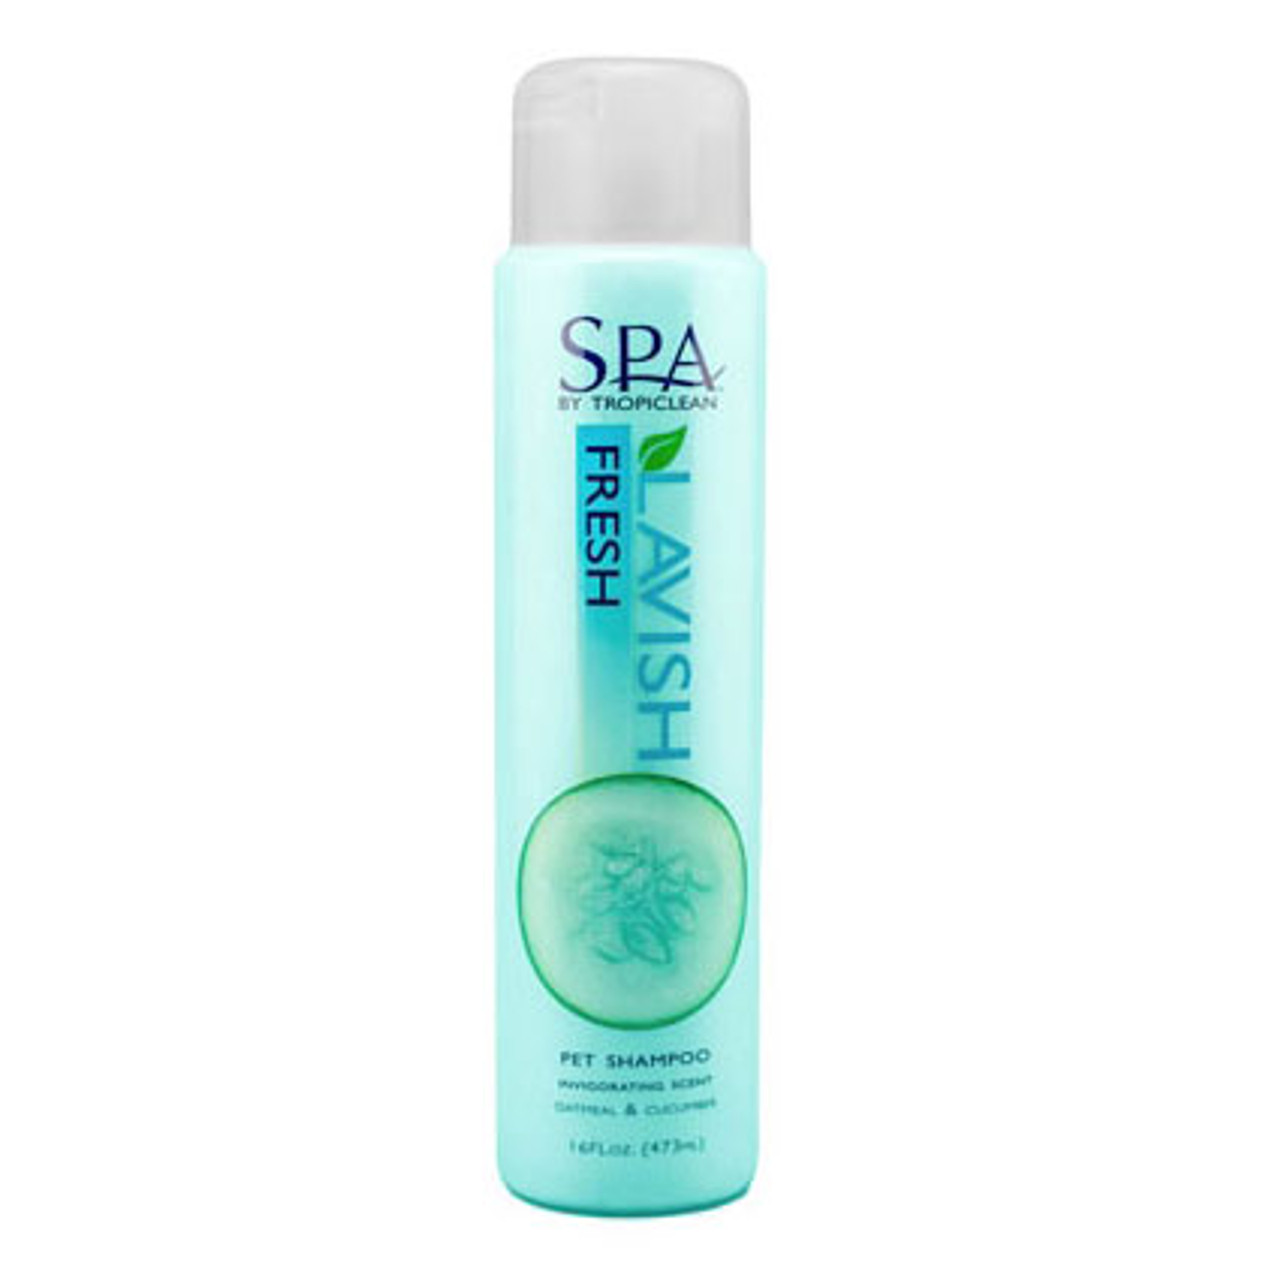 Image SPA Lavish Fresh Shampoo by Tropiclean